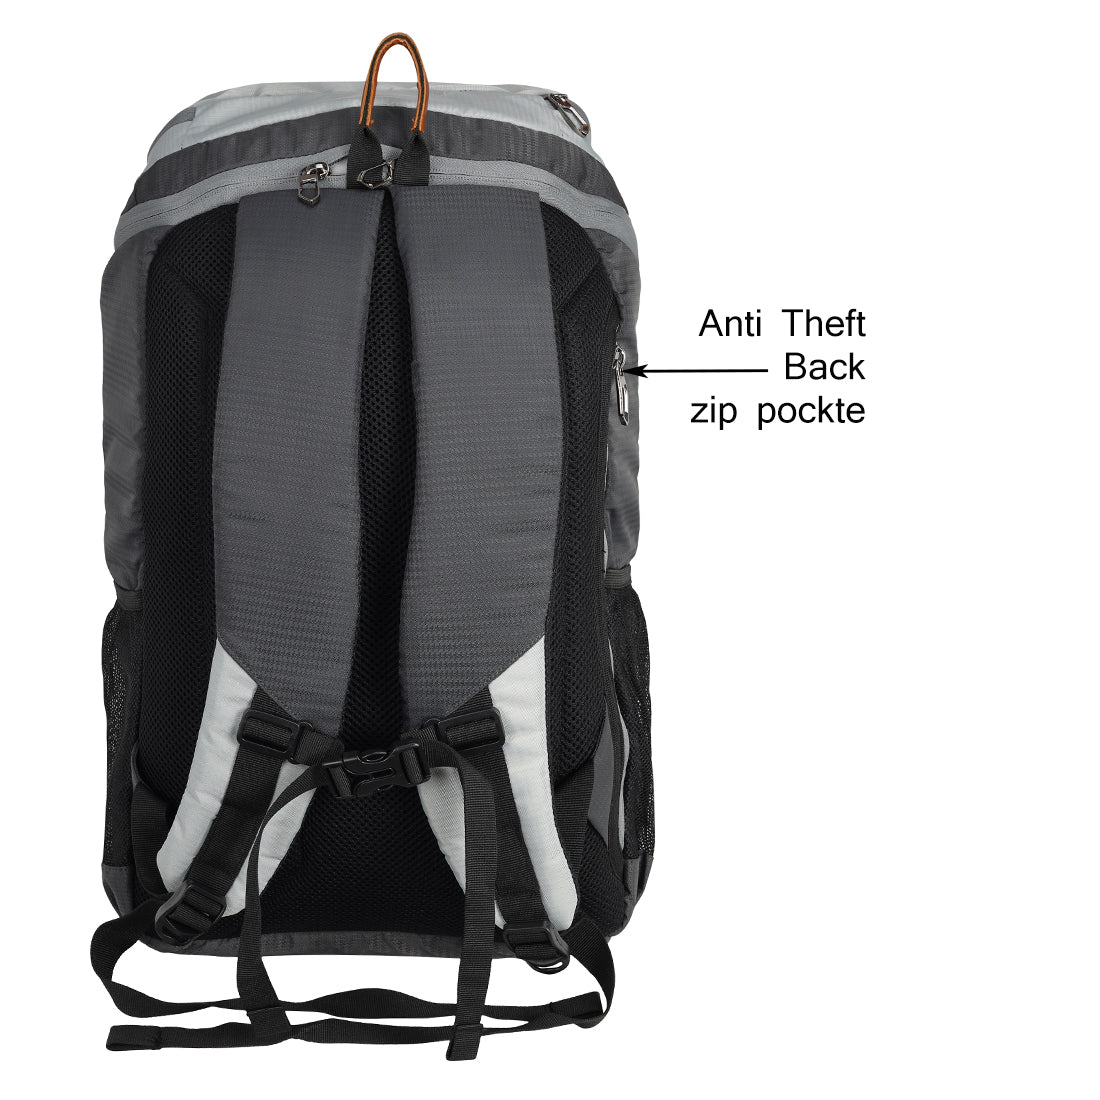 Fly Fashion 20 ltrs Polyester Multi Color Laptop Backpack Rucksack Travel Bag Men Women (Grey)